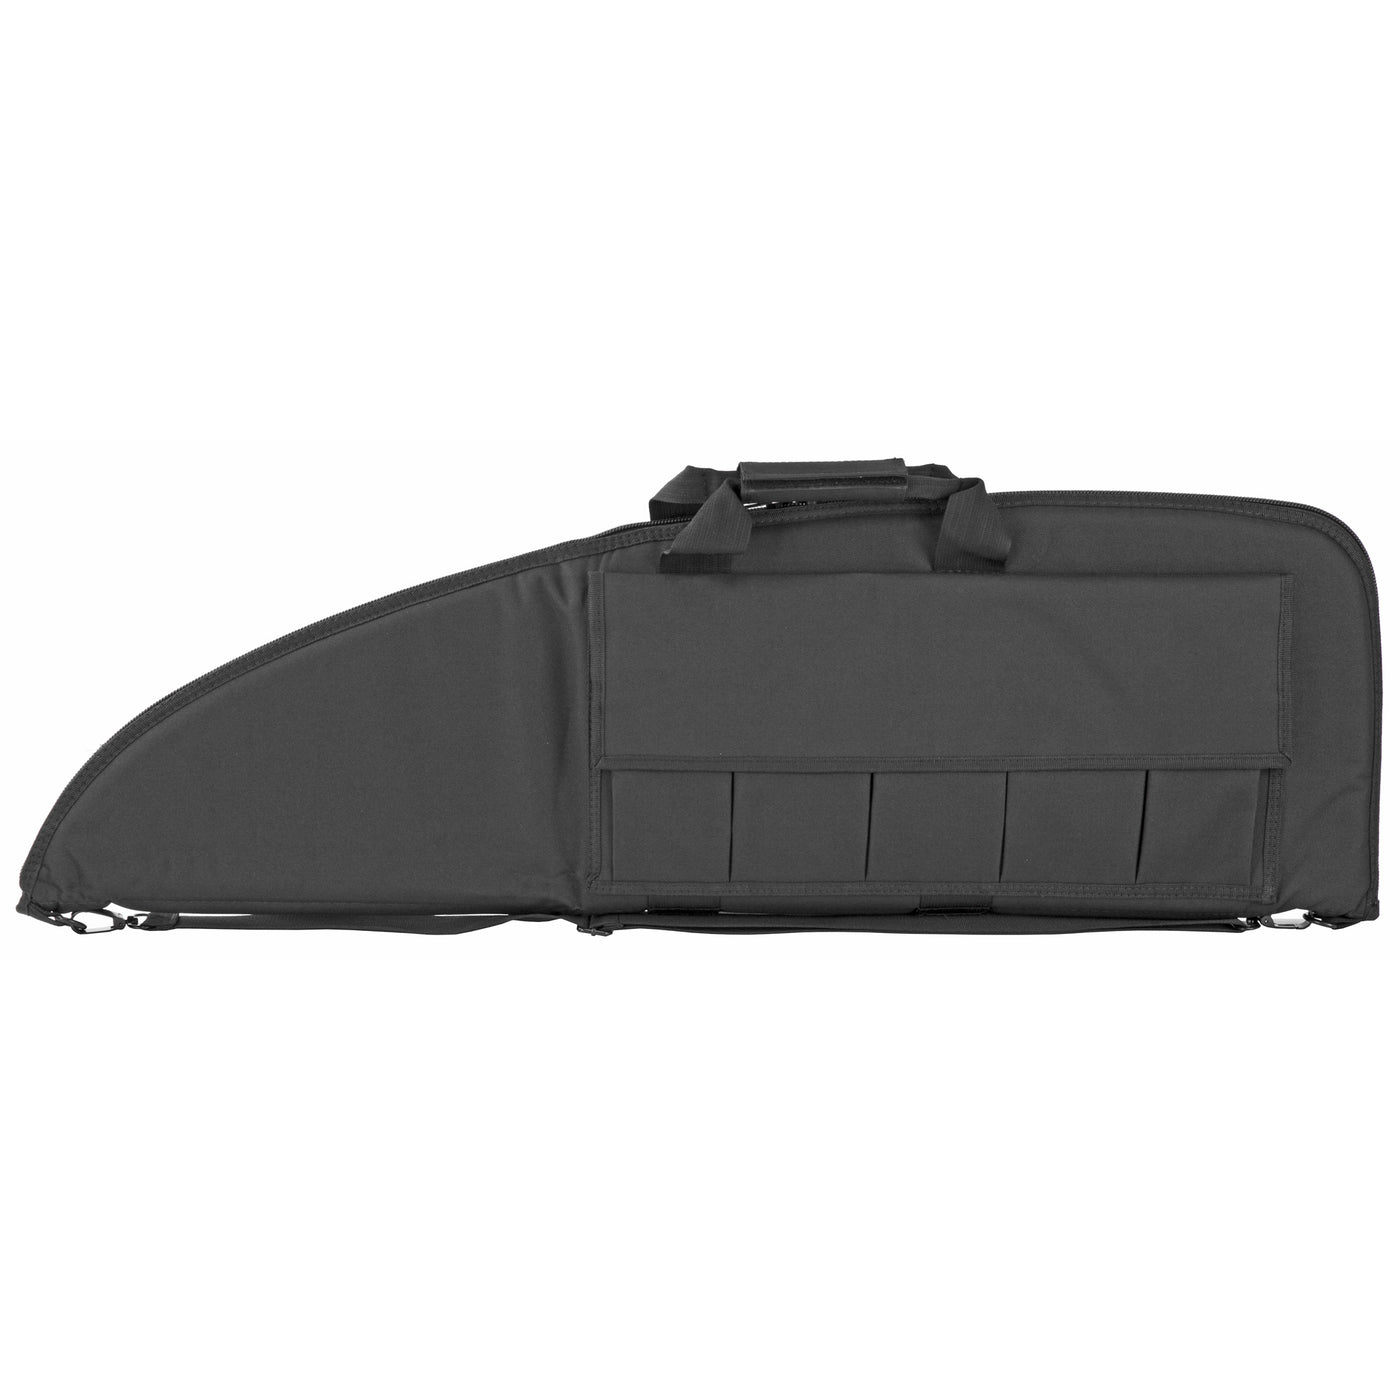 Vism Soft Gun Case 38 inch x 13 inch-Black